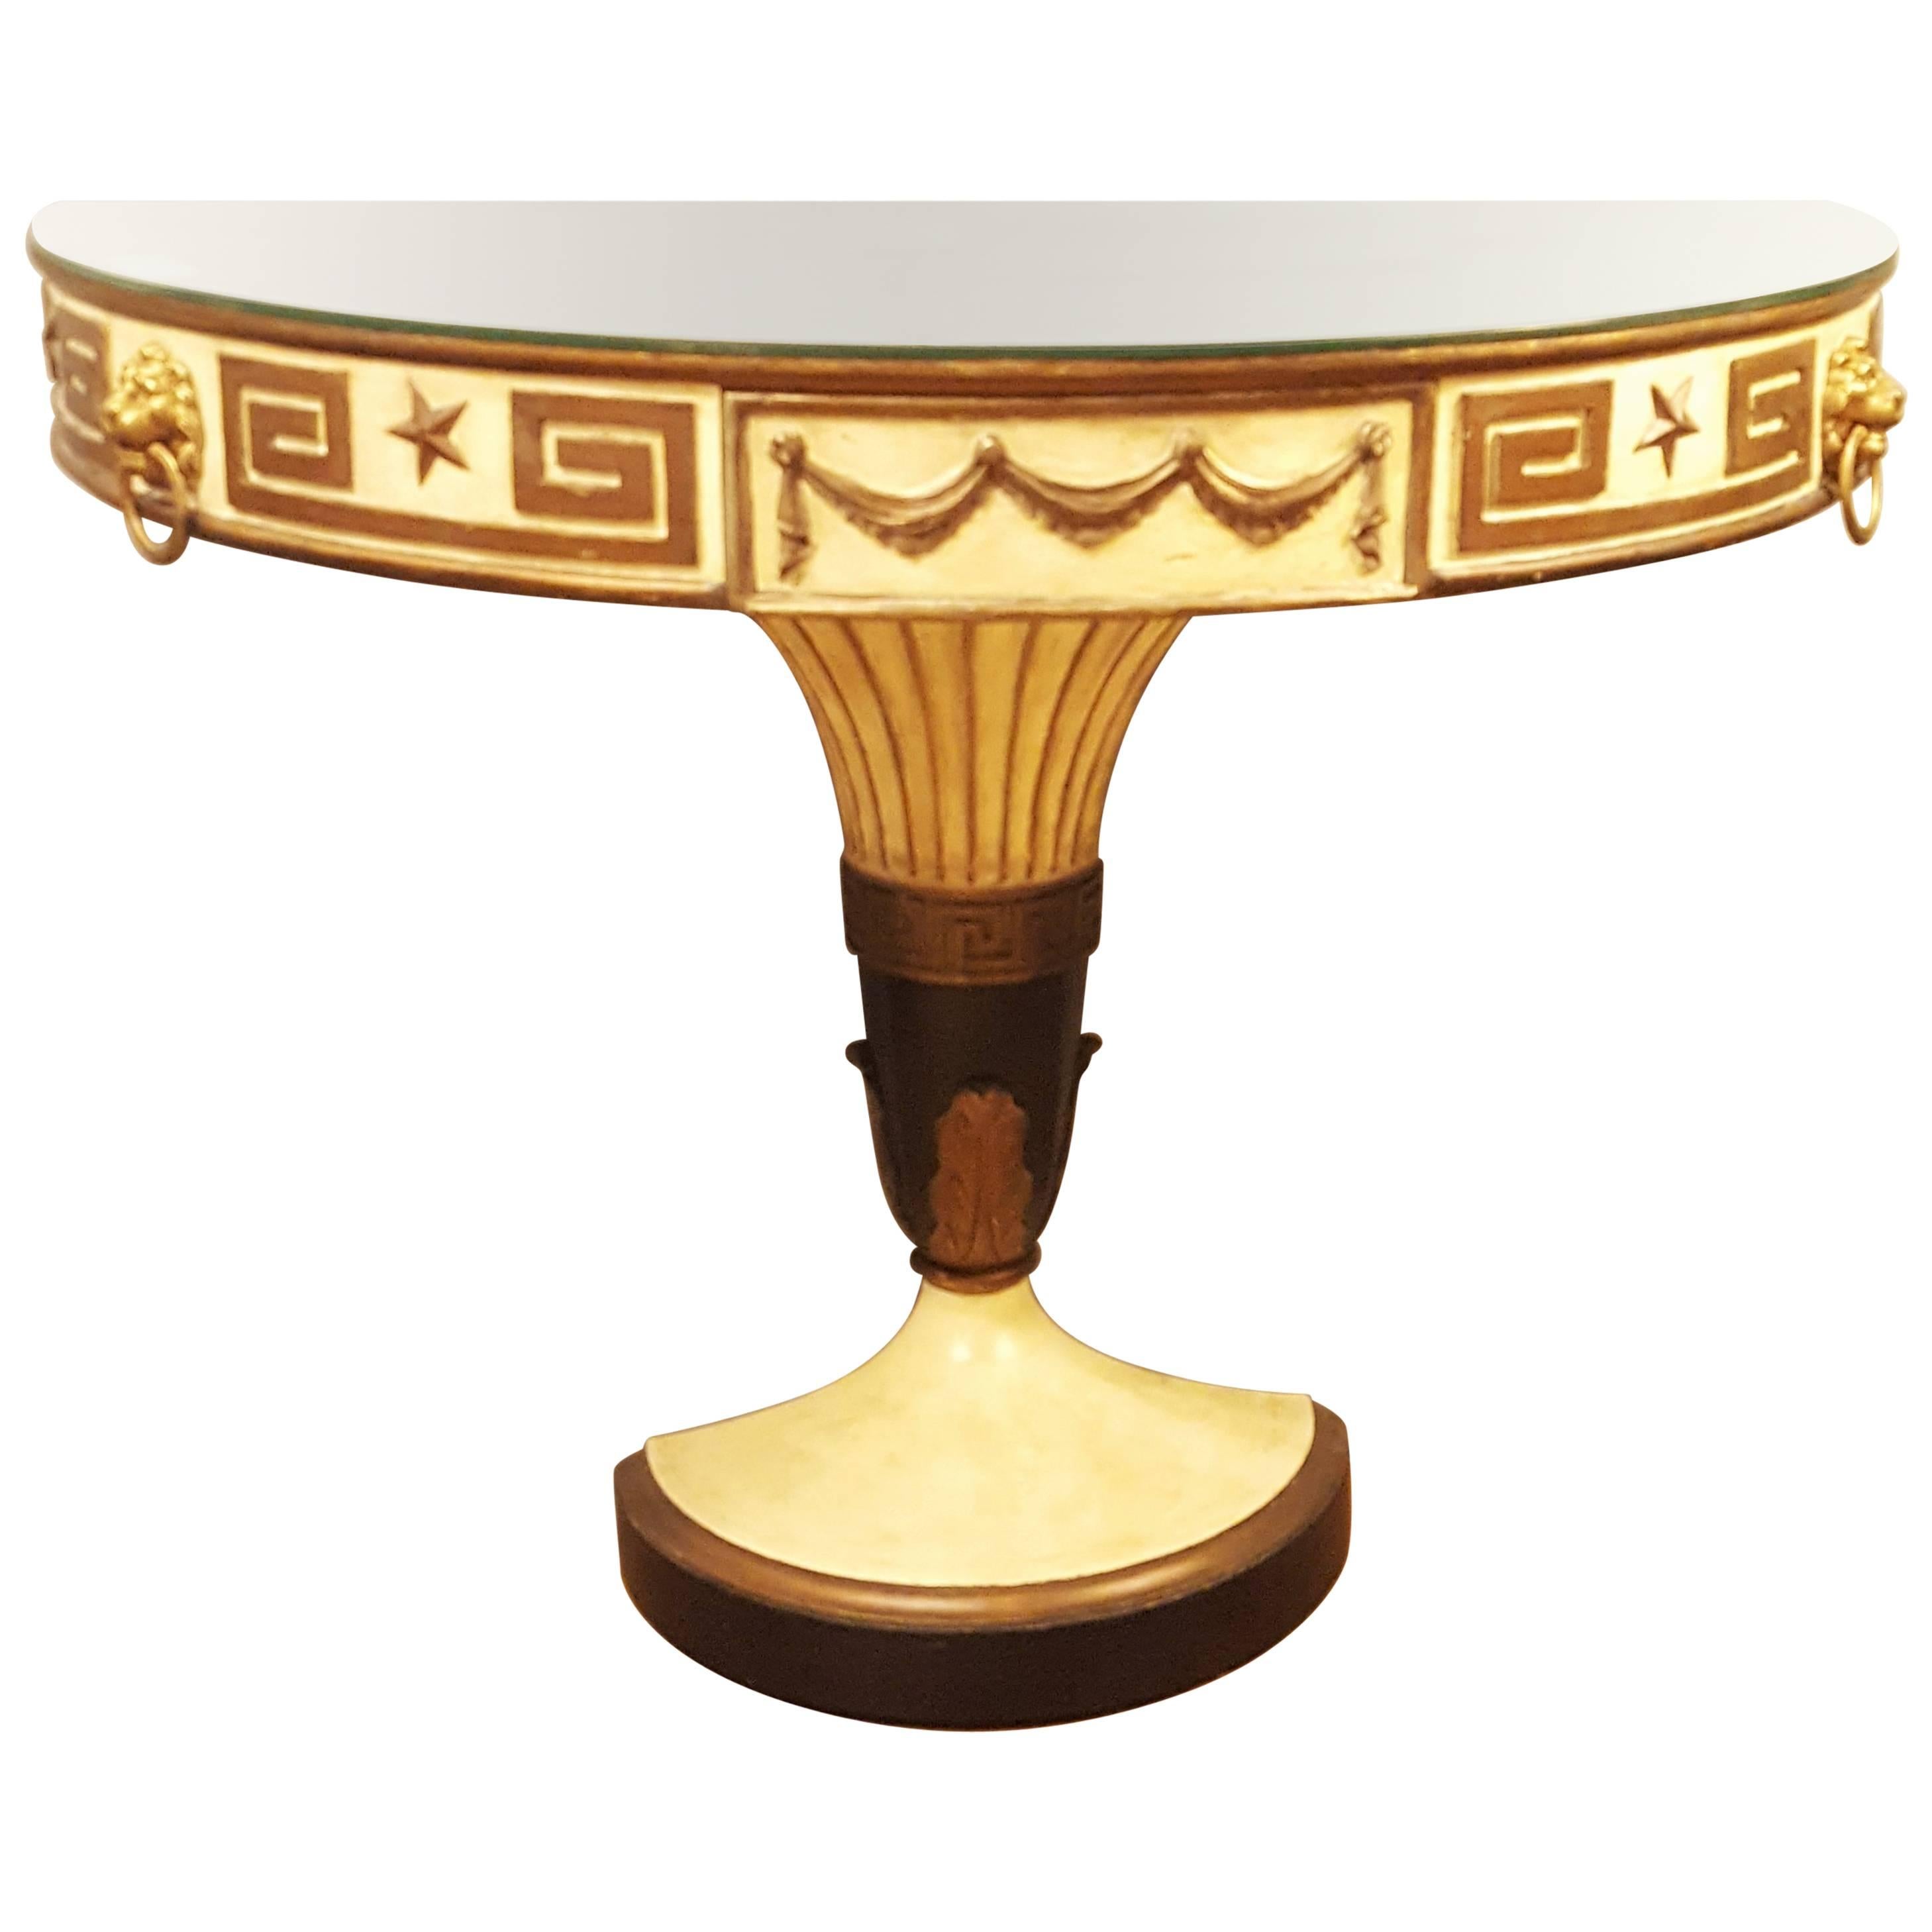 Mirrored Top Demilune Console Table Gold Gilt Greek Key Design Manner Of Jansen